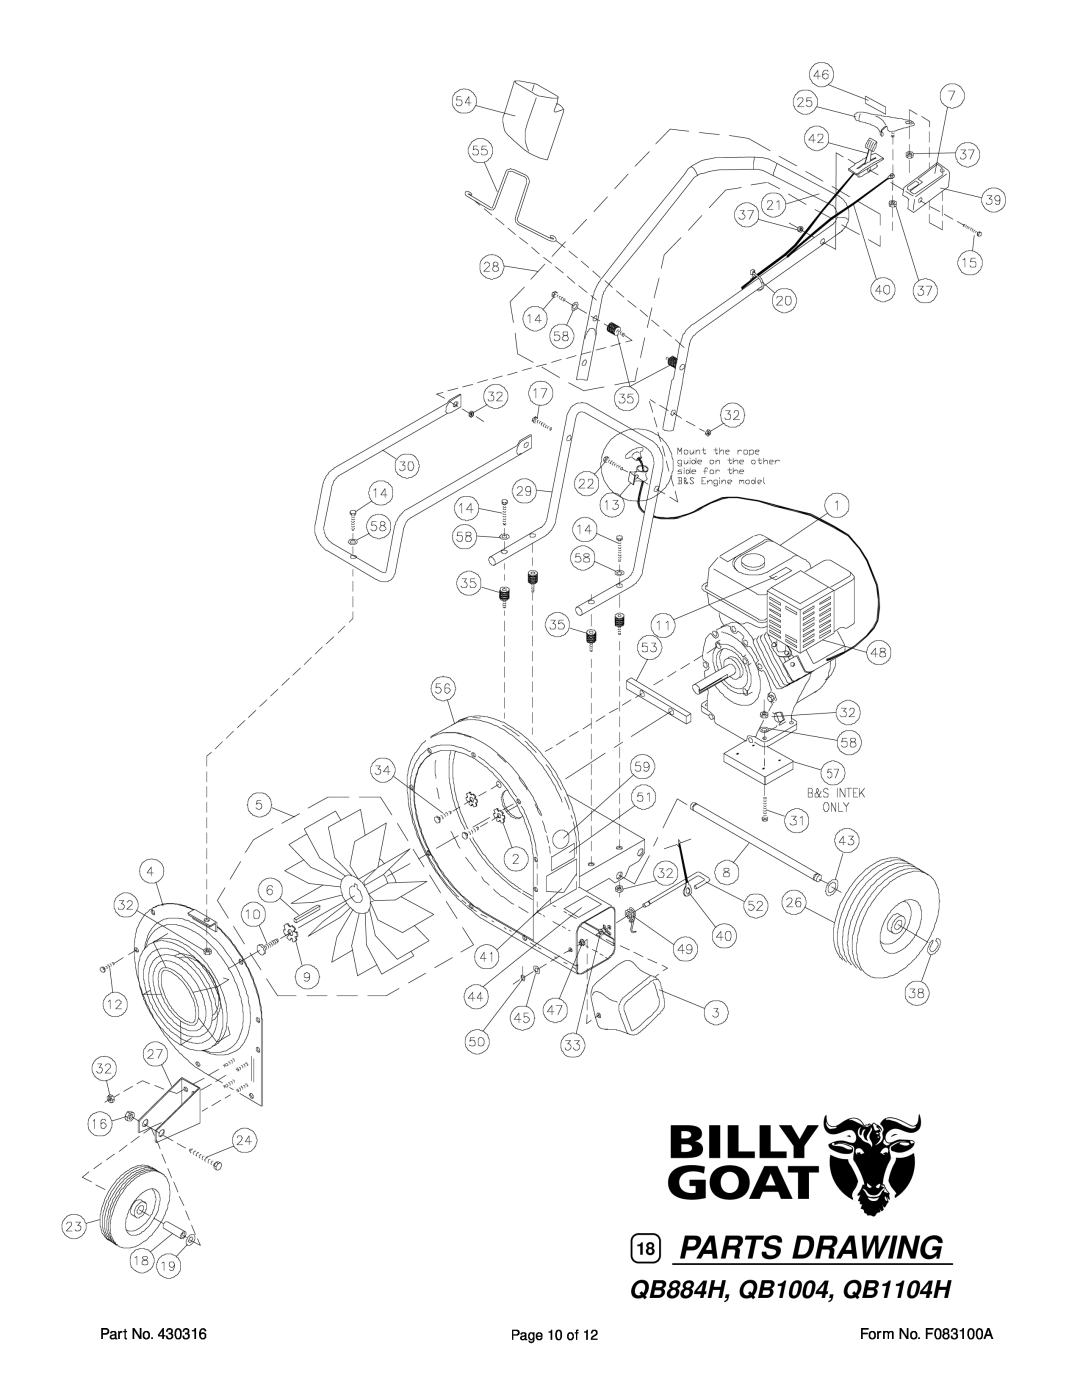 Billy Goat specifications Parts Drawing, QB884H, QB1004, QB1104H 